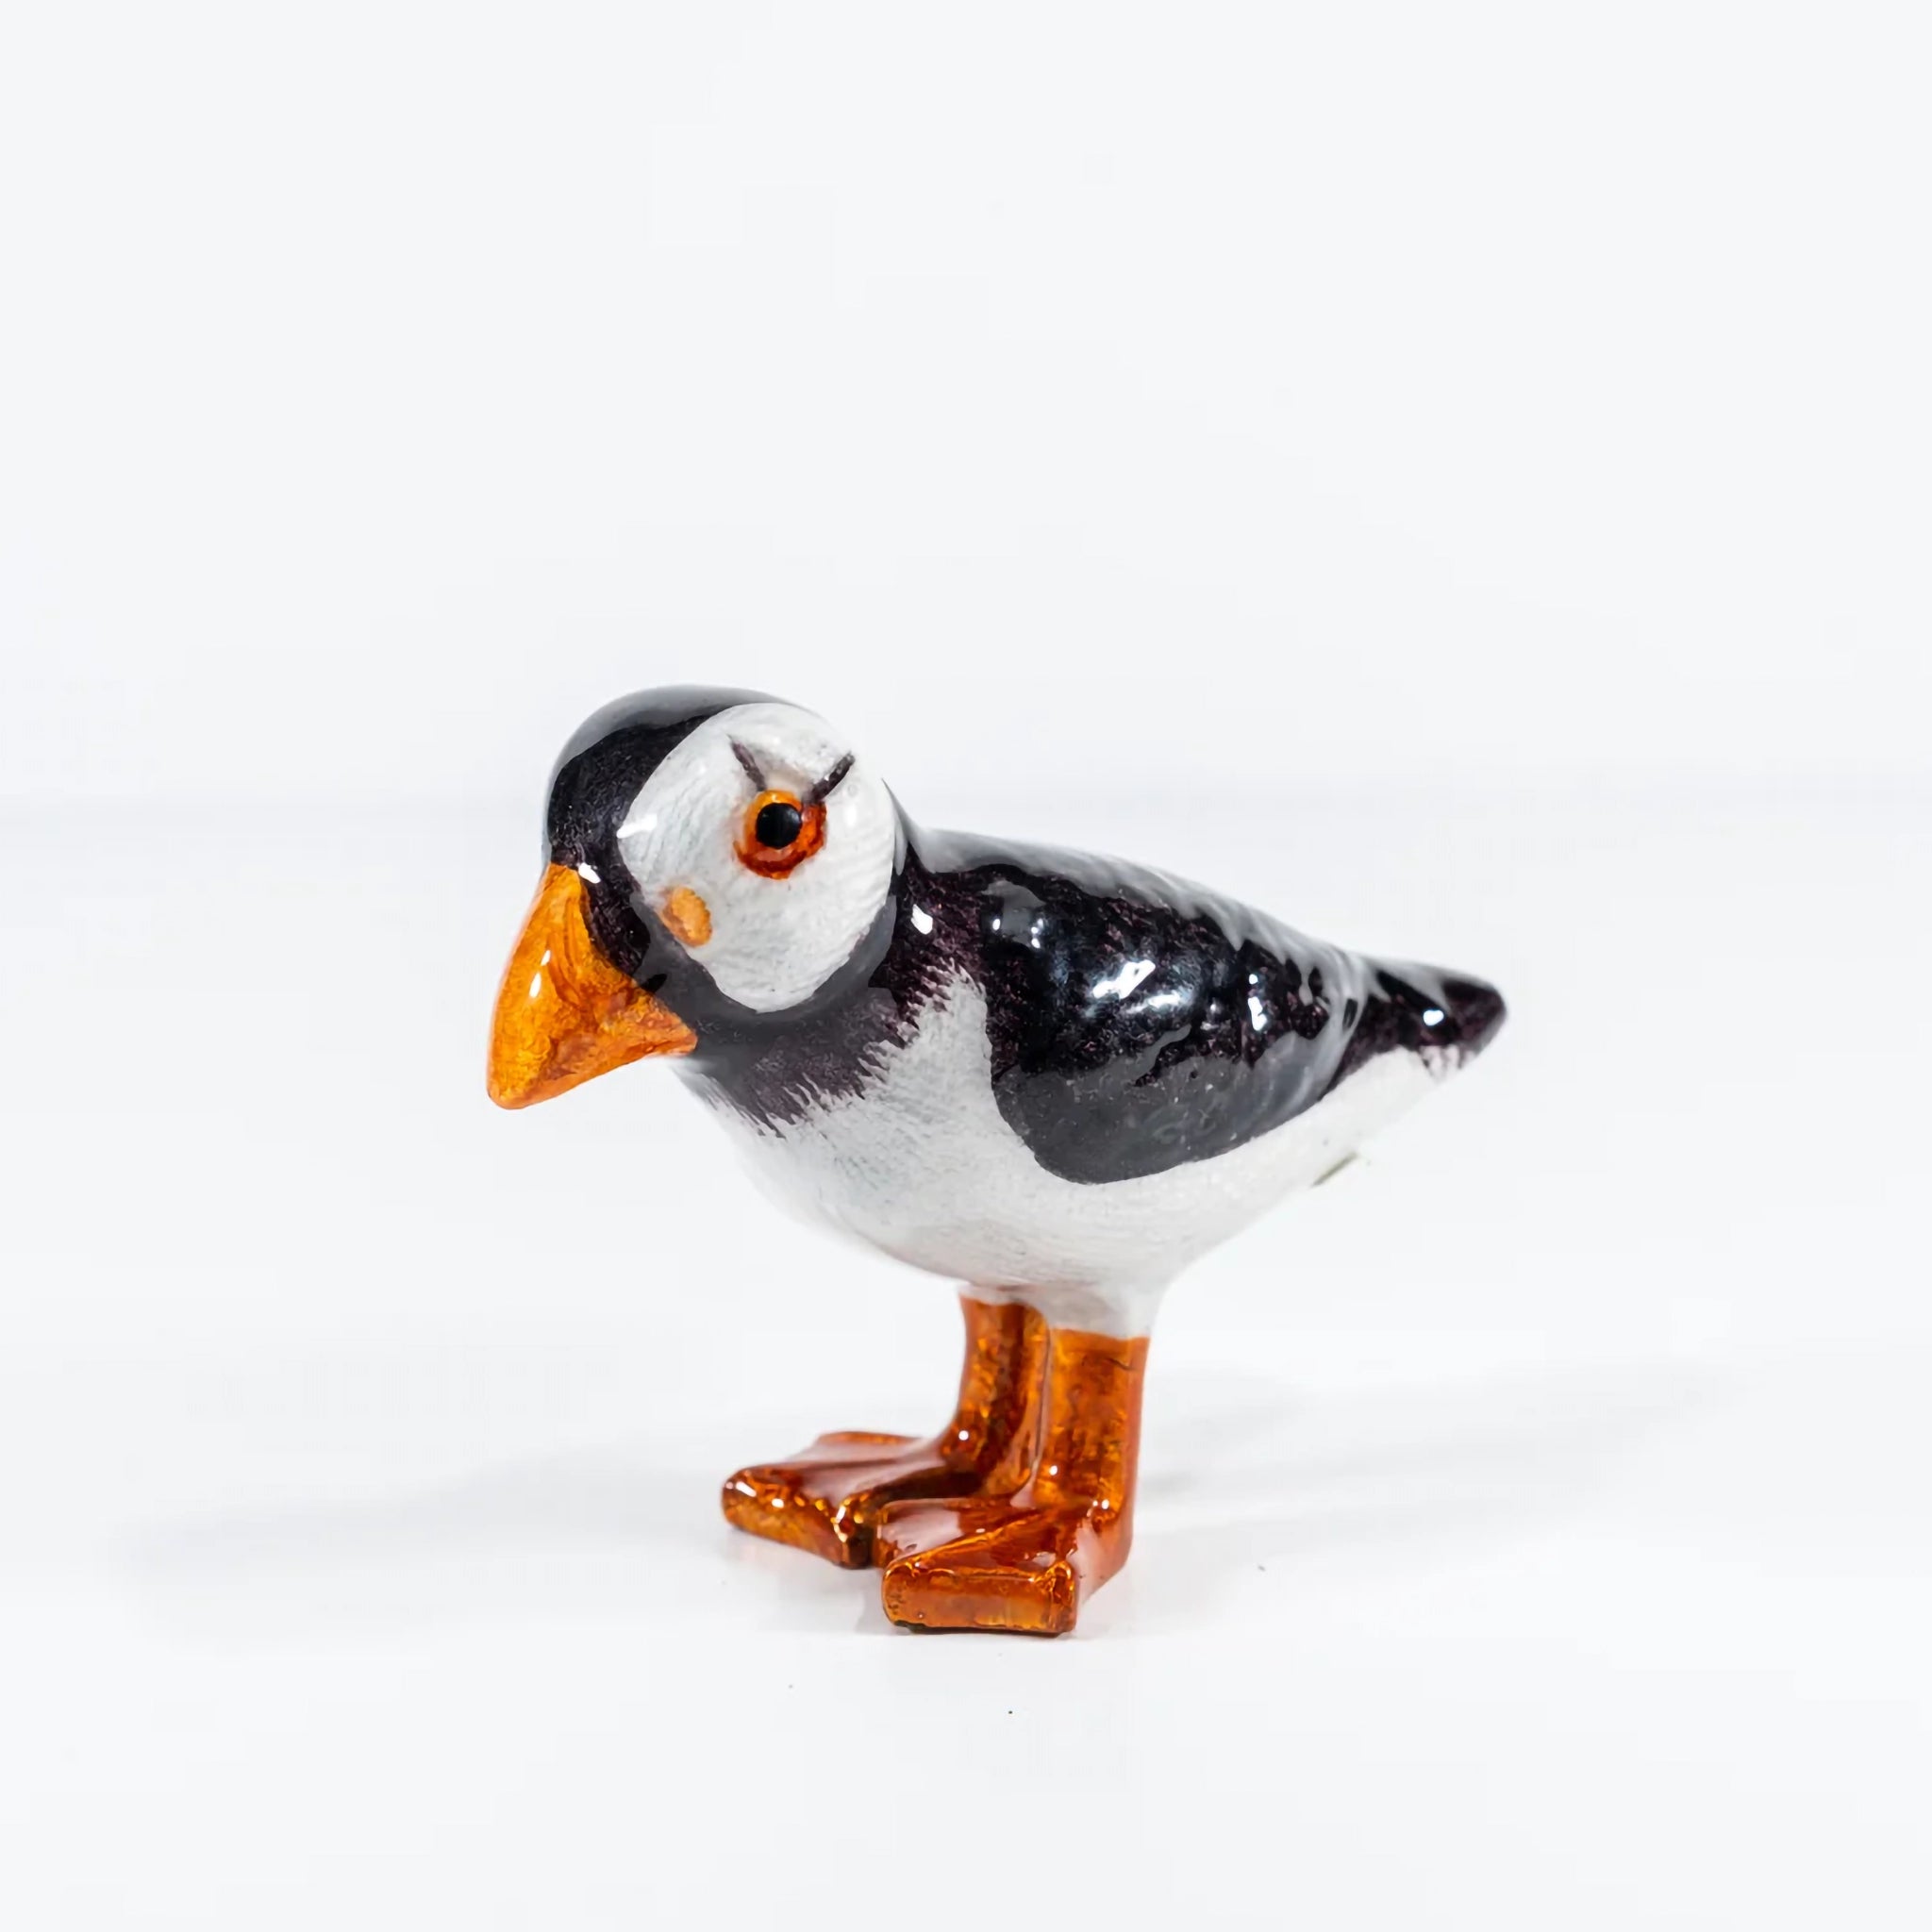 Small black, white and orange shiny enamel puffin ornament